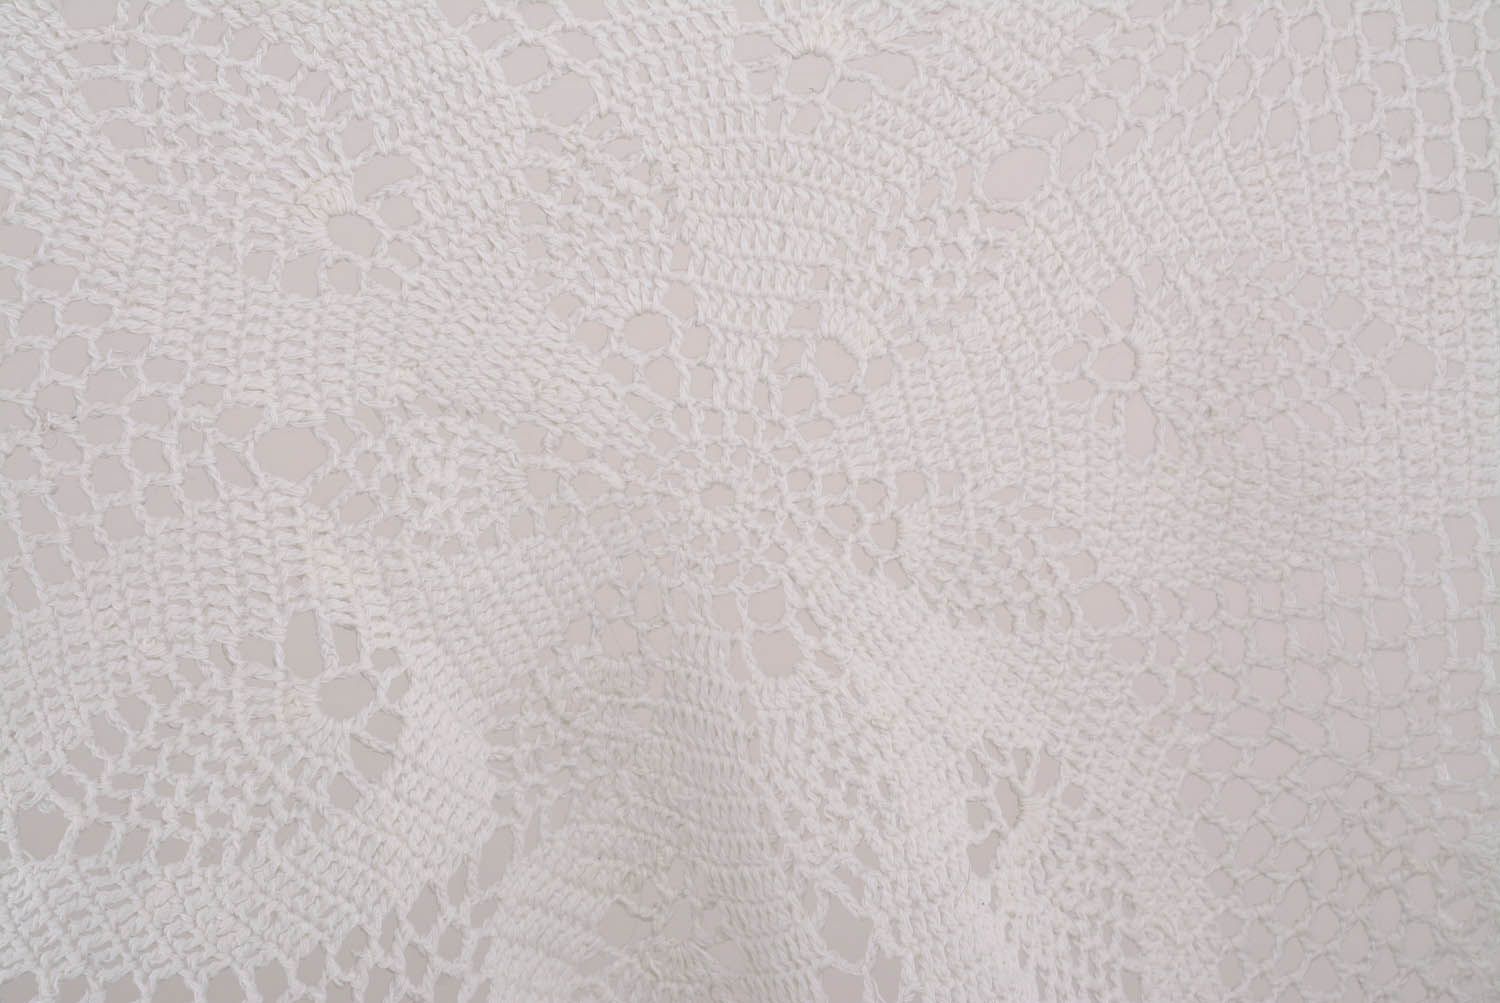 Knitted cotton napkin photo 2